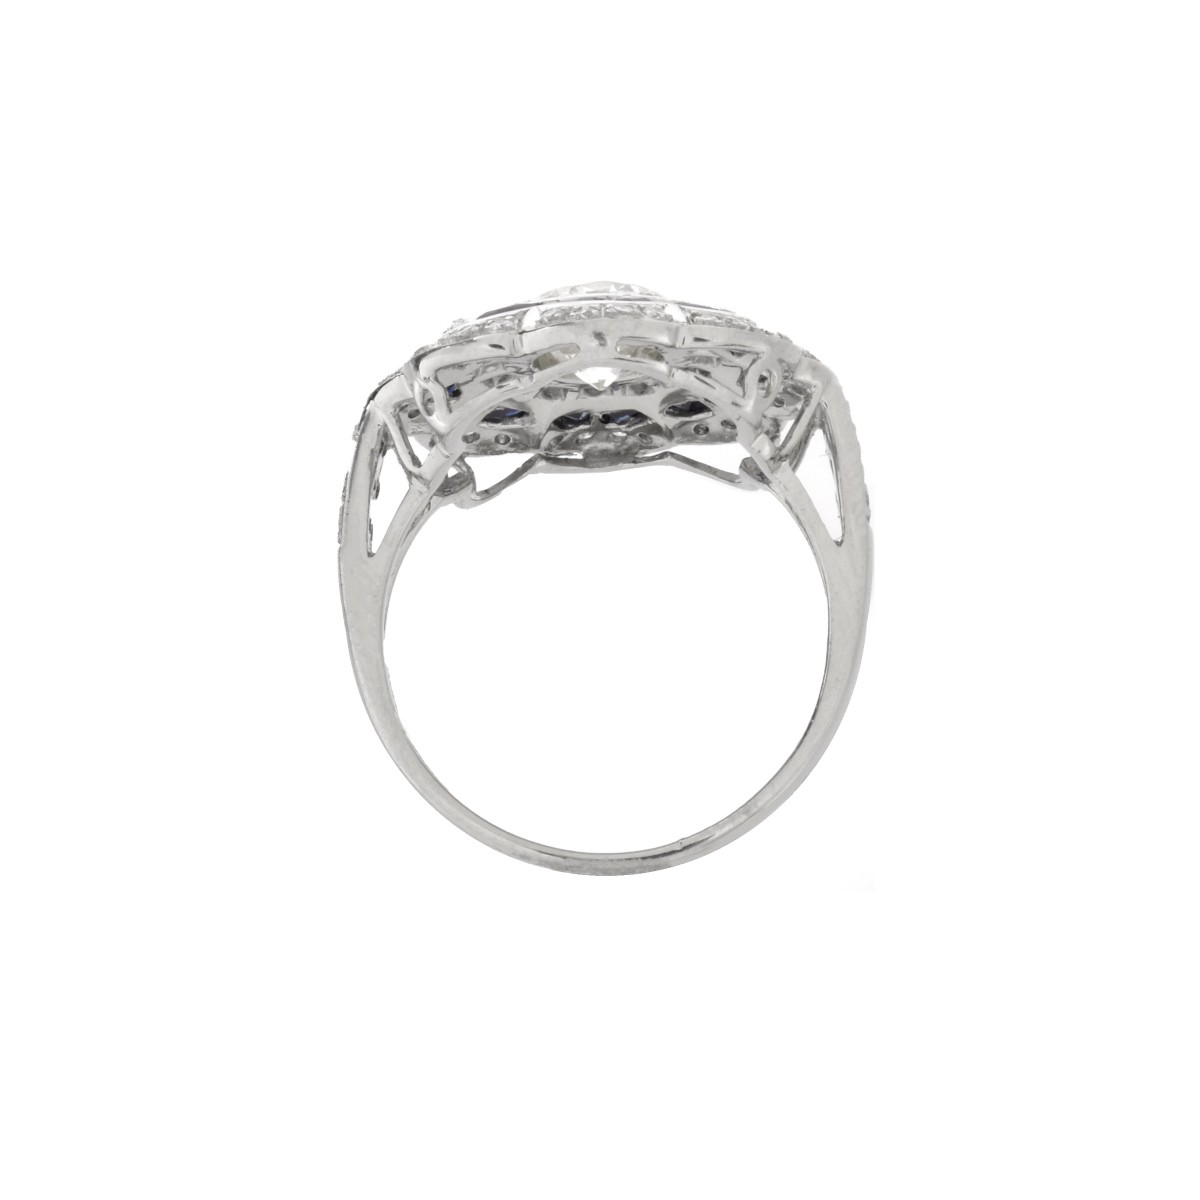 Diamond, Sapphire and Platinum Ring